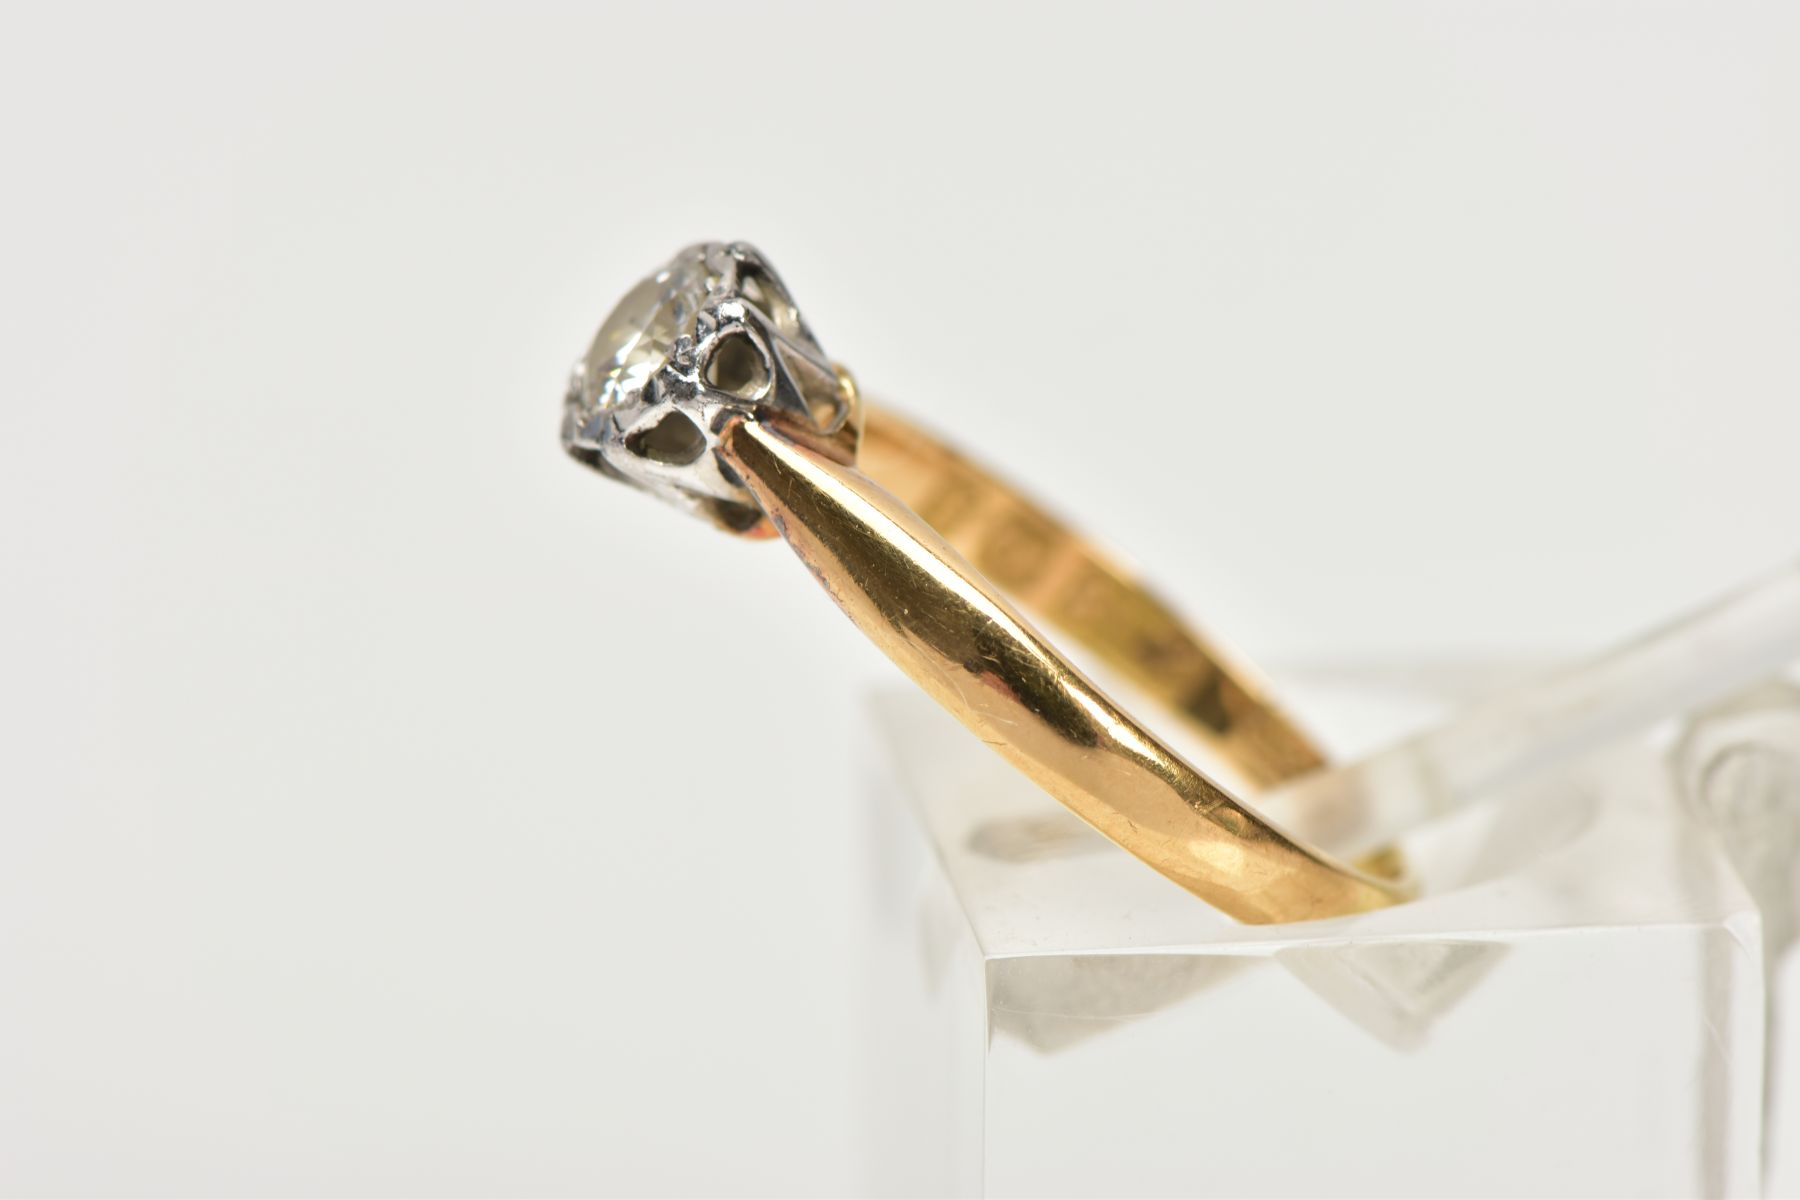 AN 18CT GOLD SINGLE STONE DIAMOND RING, centring on an illusion set round brilliant cut diamond, - Image 2 of 4